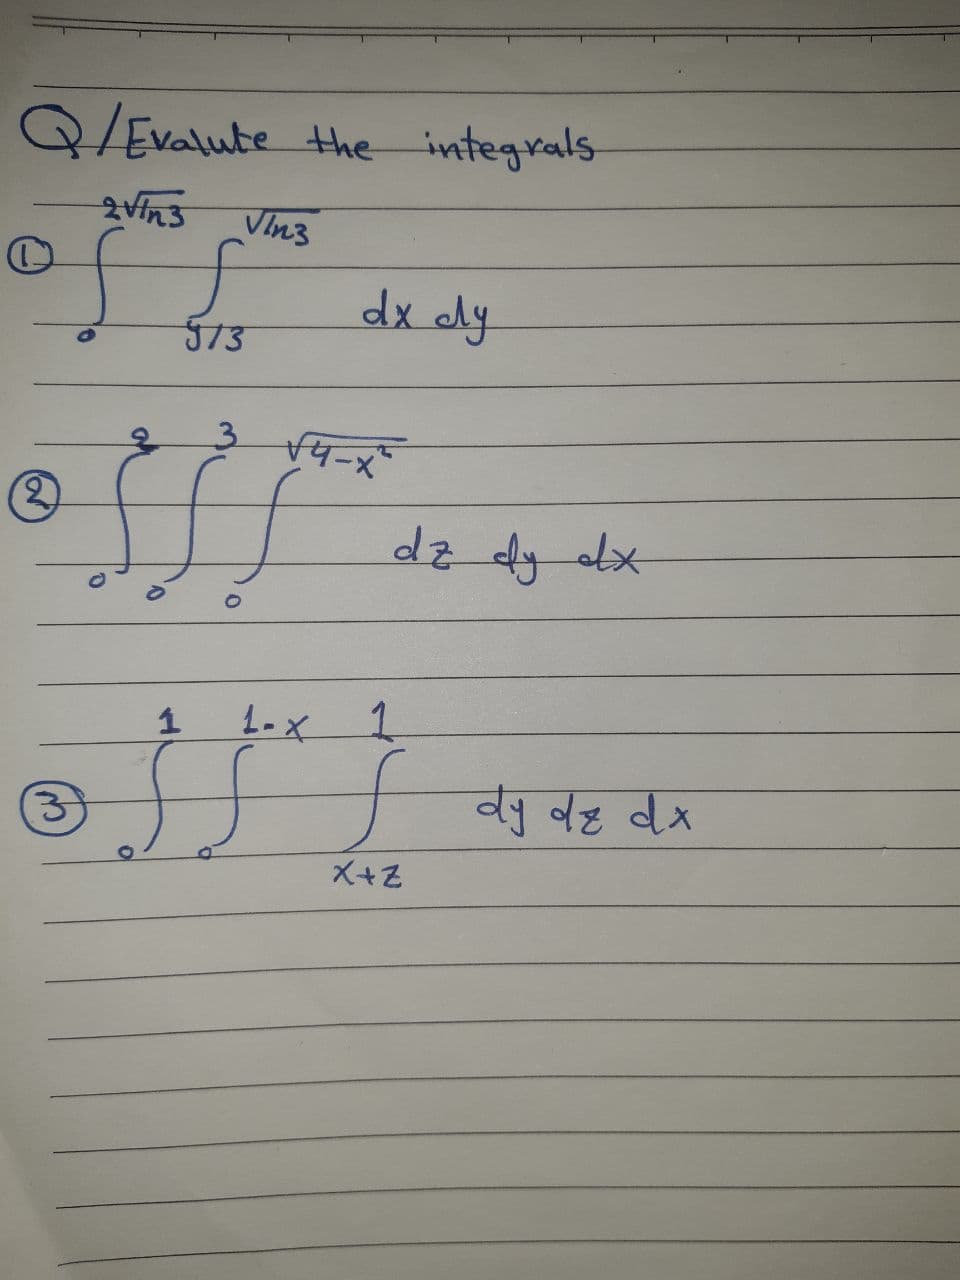 Q/Evalute the integrals
Vin3
dx dy
573
3.
2)
dz dy dx
1-x
1.
वु बह वx
